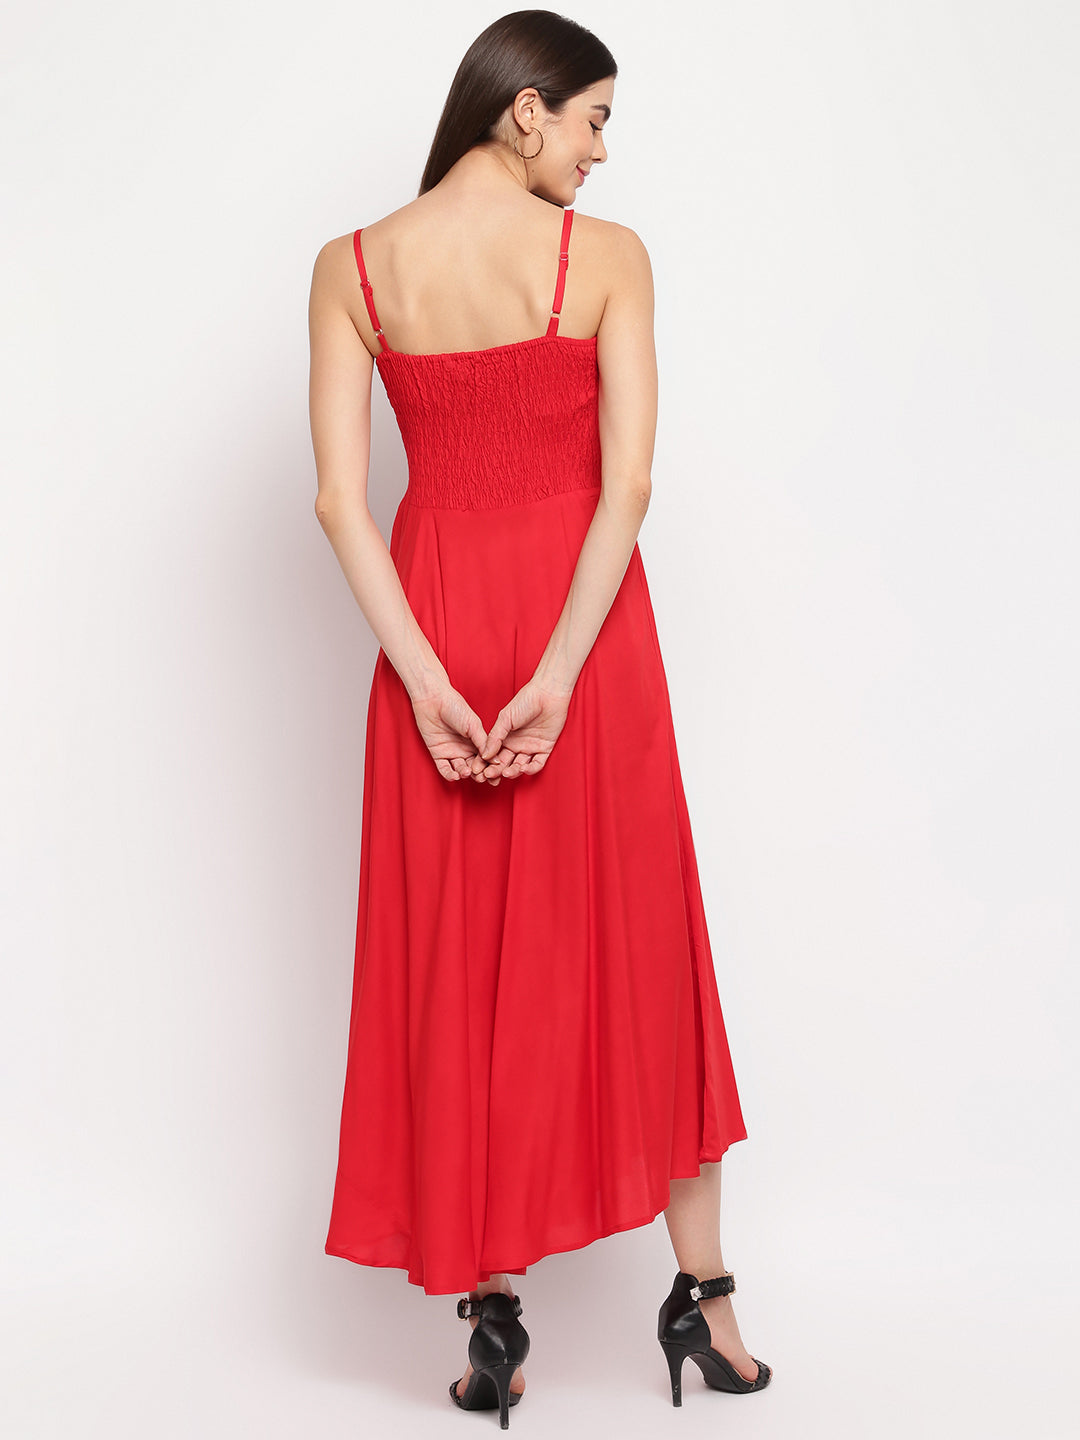 Aawari Fit & Flare Solid Bobbin Dress ( RED )